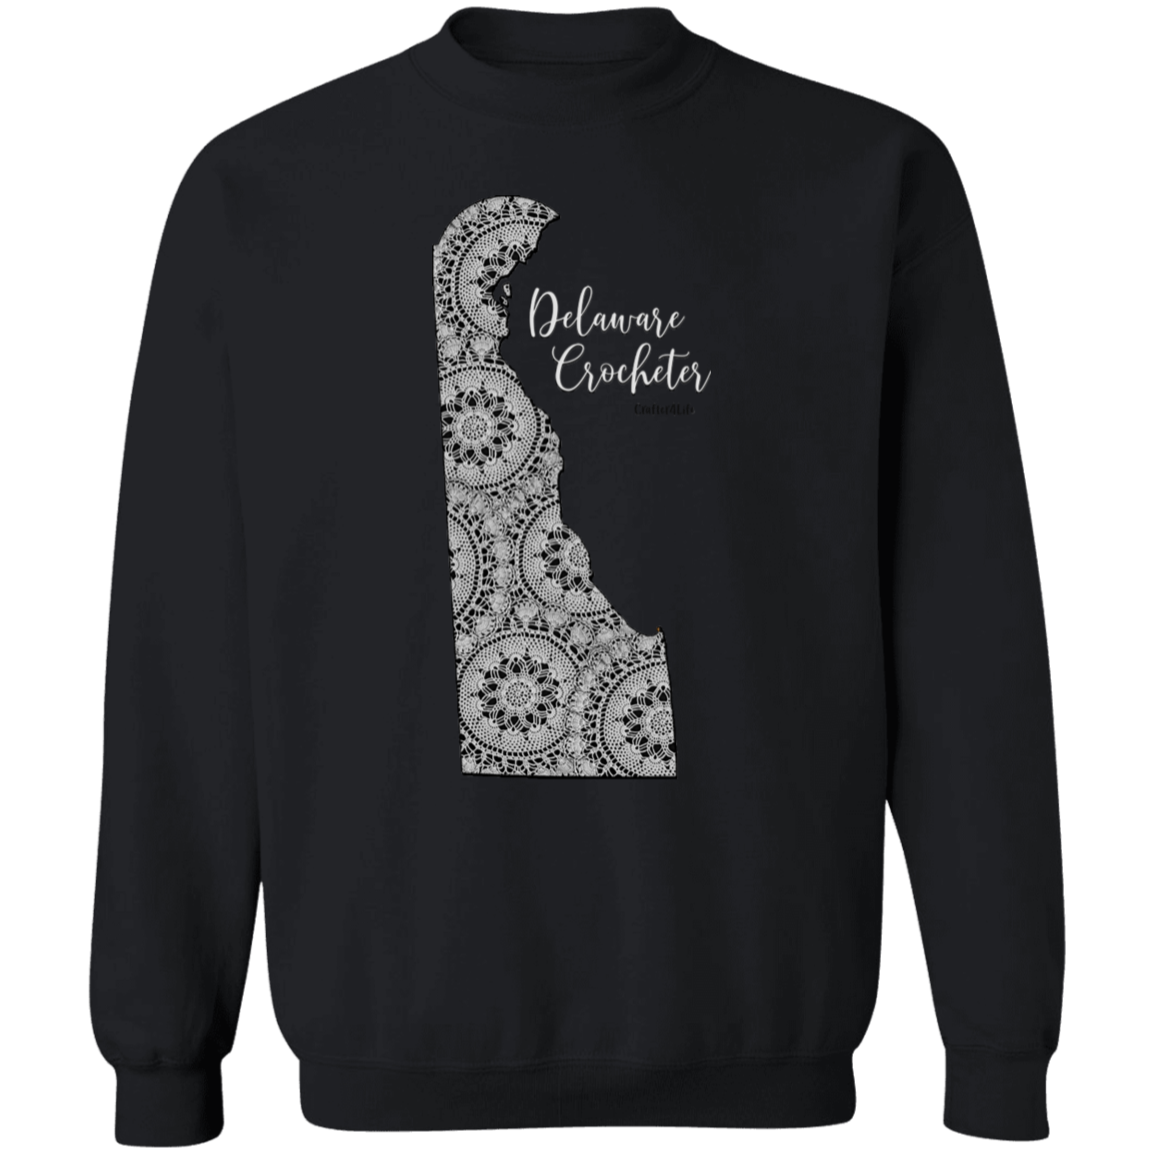 Delaware Crocheter Crewneck Pullover Sweatshirt